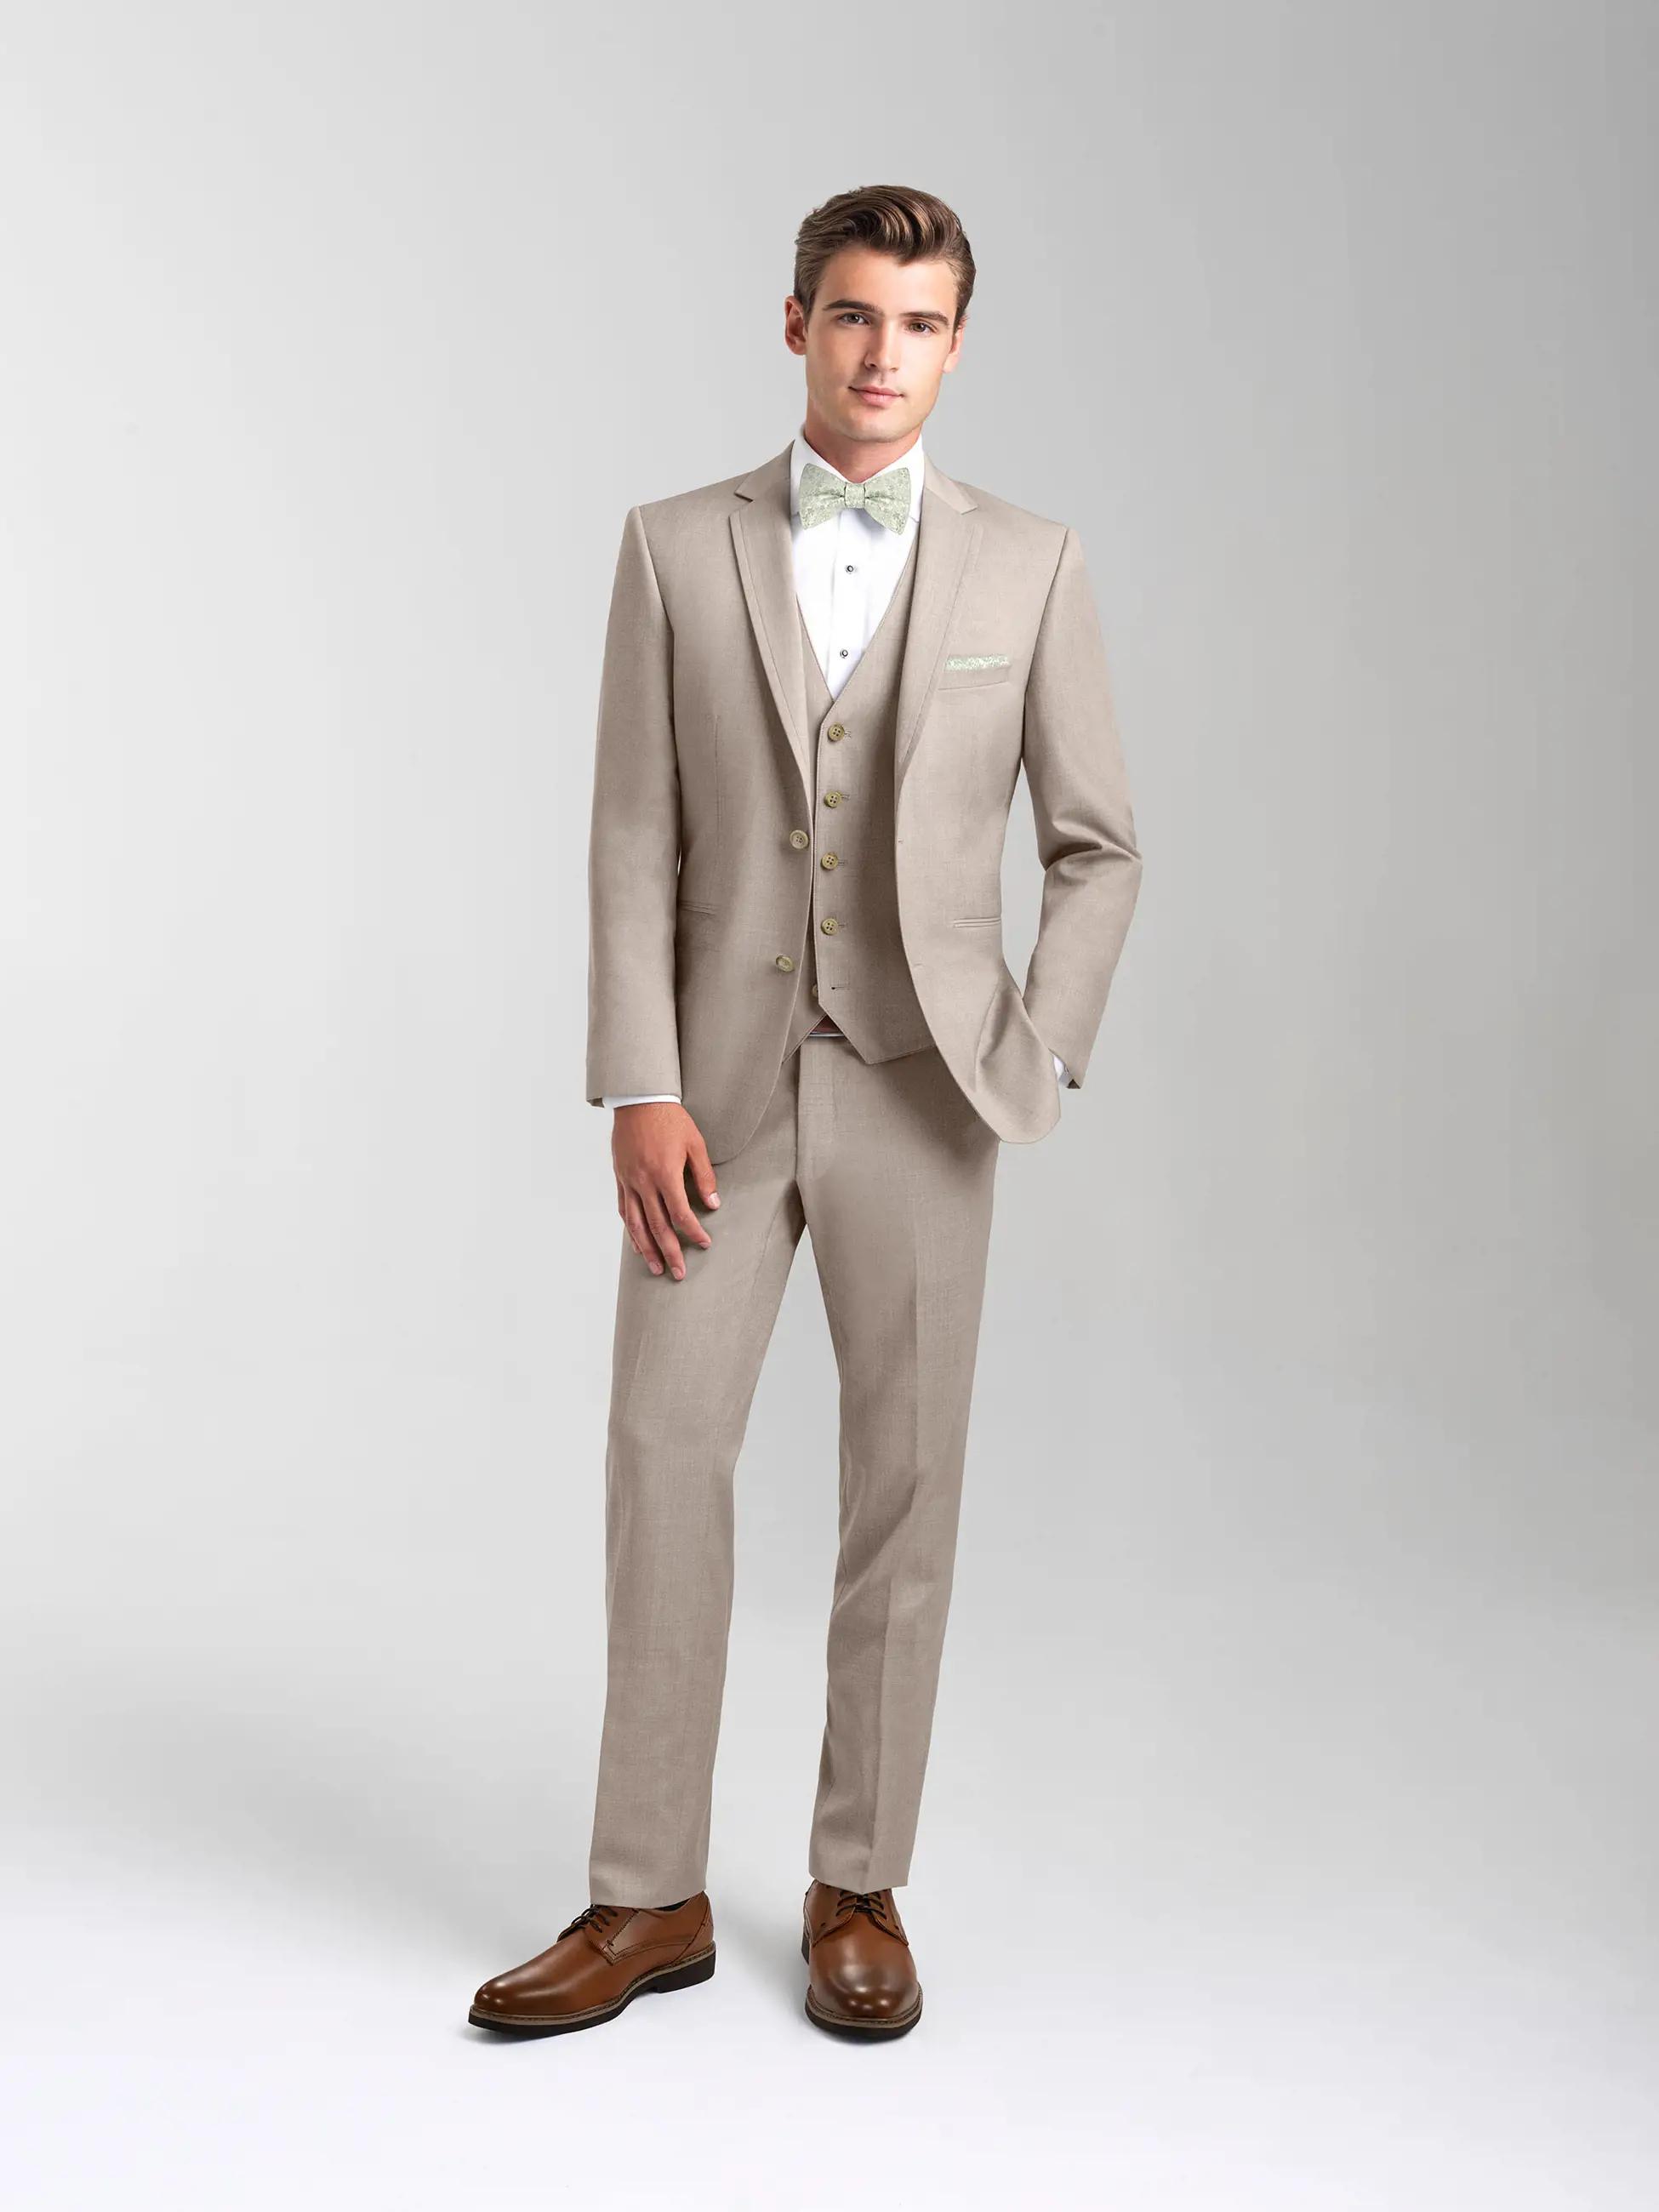 Model wearing a light-gray suit